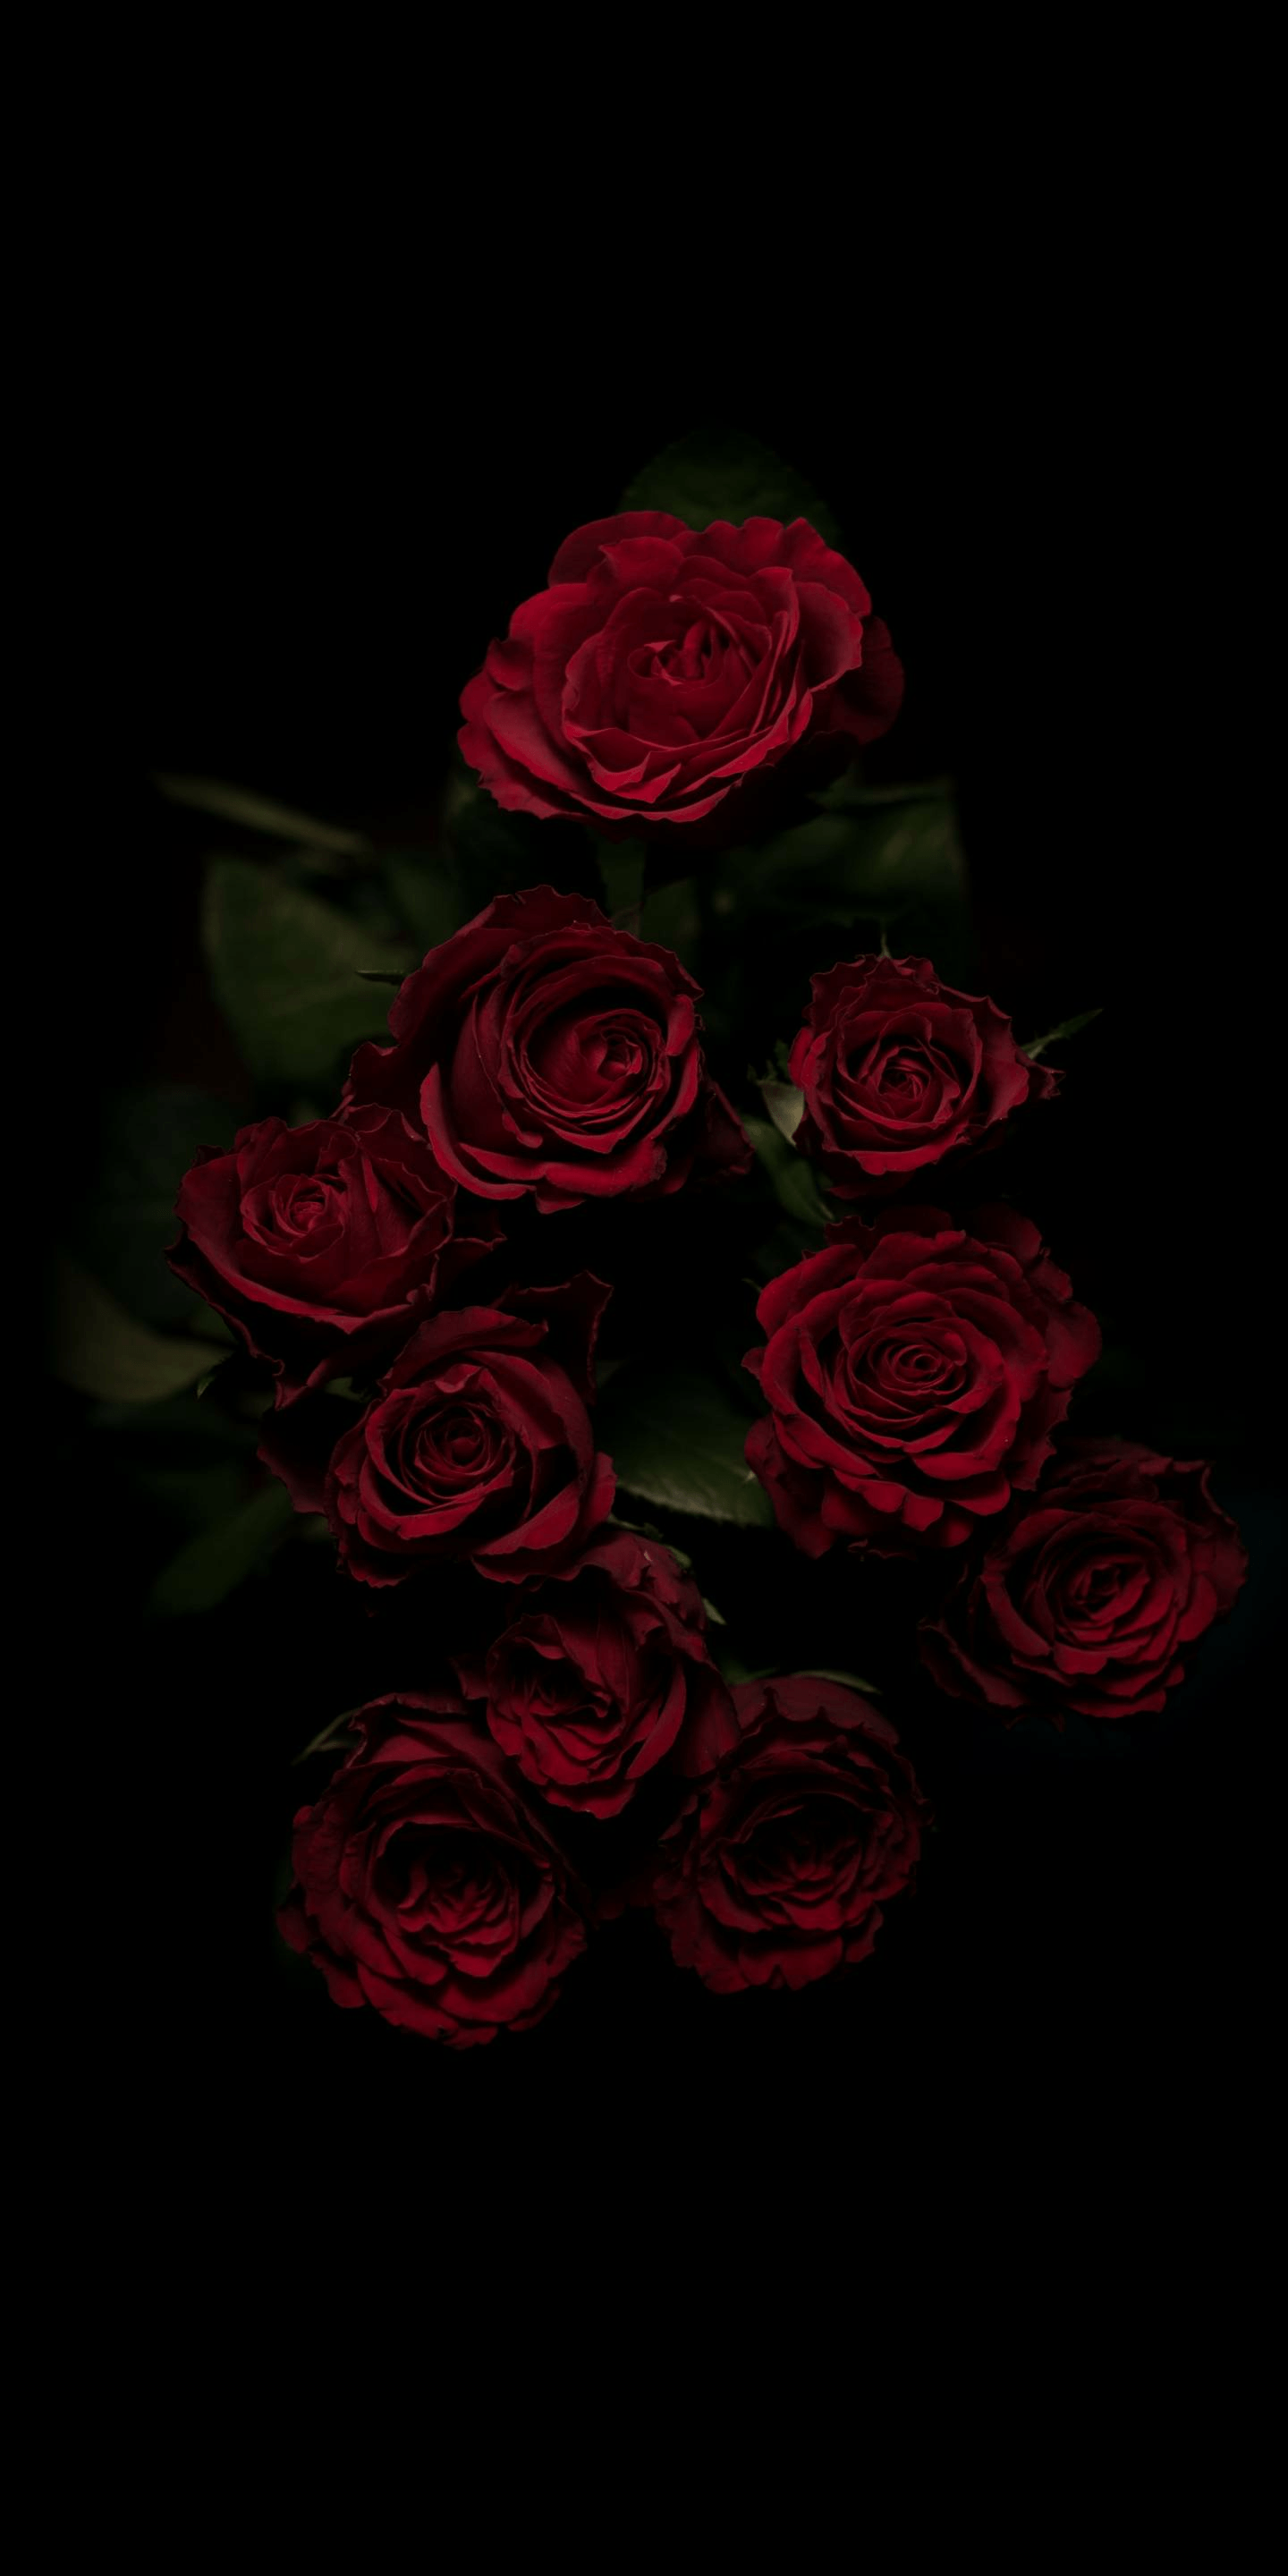 Red roses on a black background - Flower, black phone, black rose, gothic, dark phone, dark, roses, black, dark red